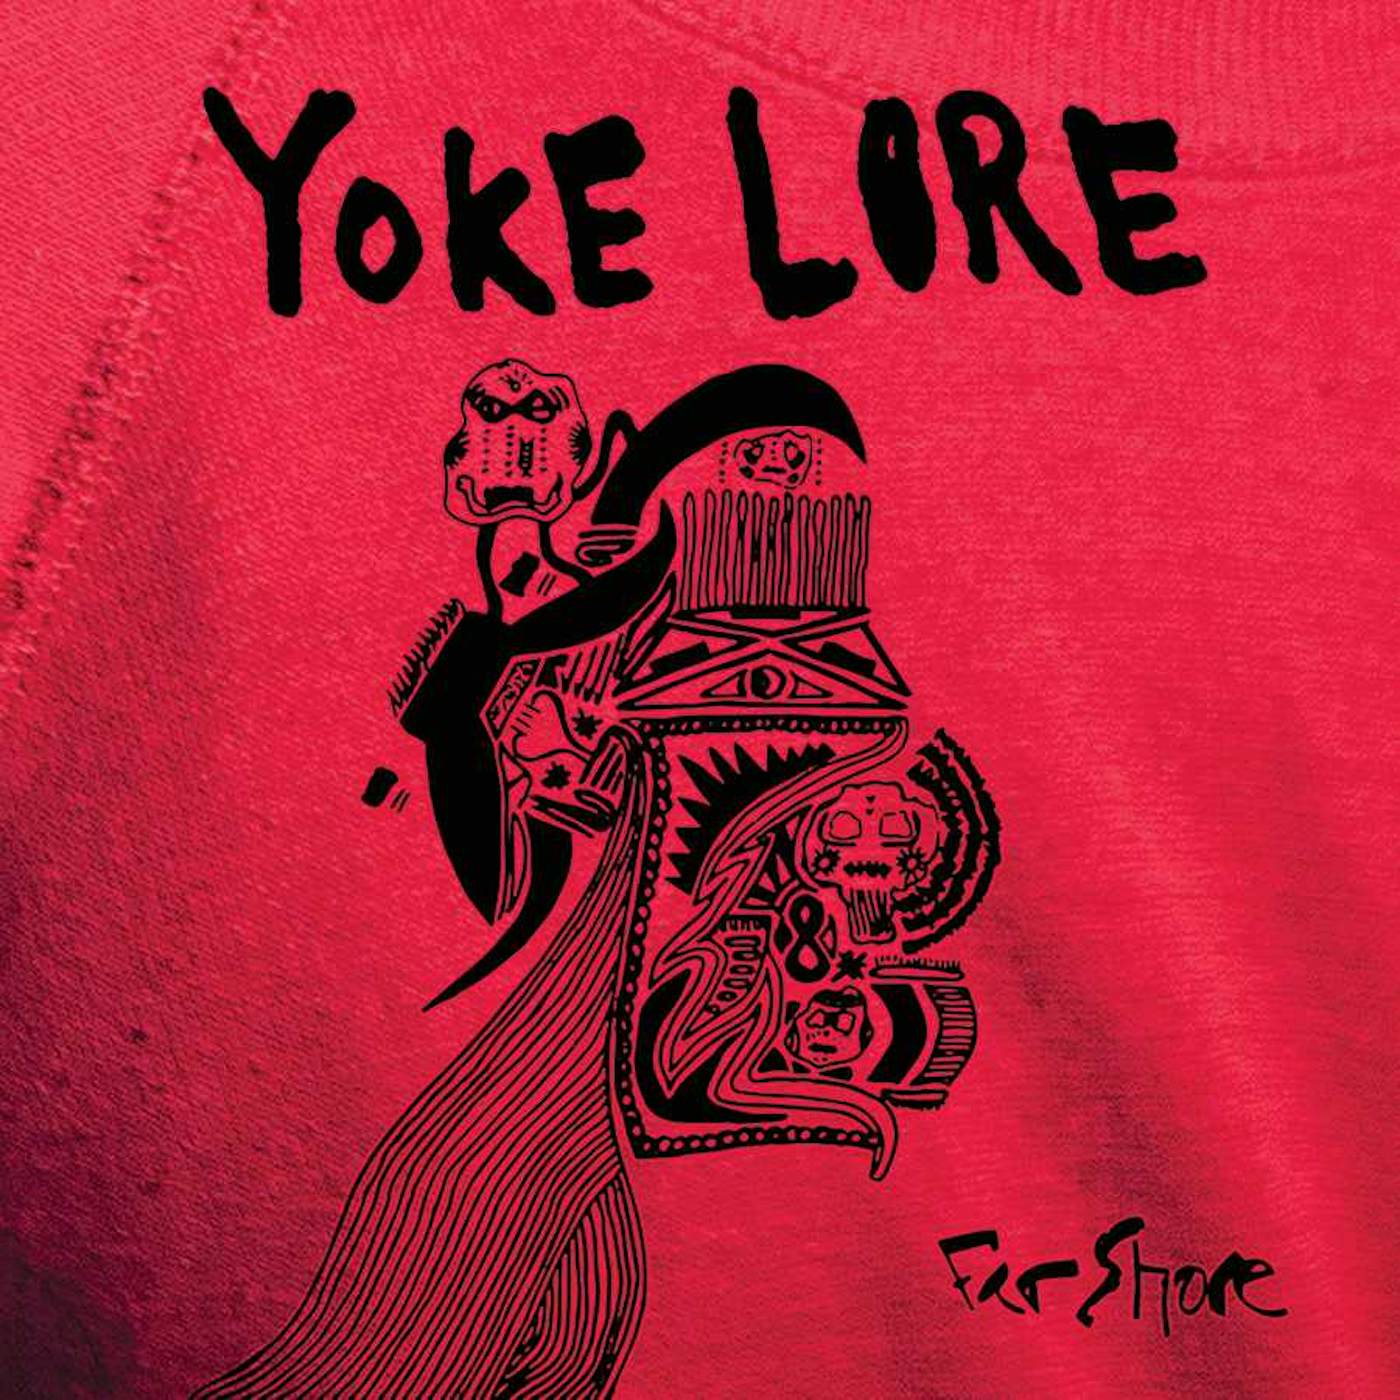 Yoke Lore FAR SHORE (5 YEAR ANNIVERSARY EDITION) (BLUE 10INCH) Vinyl Record